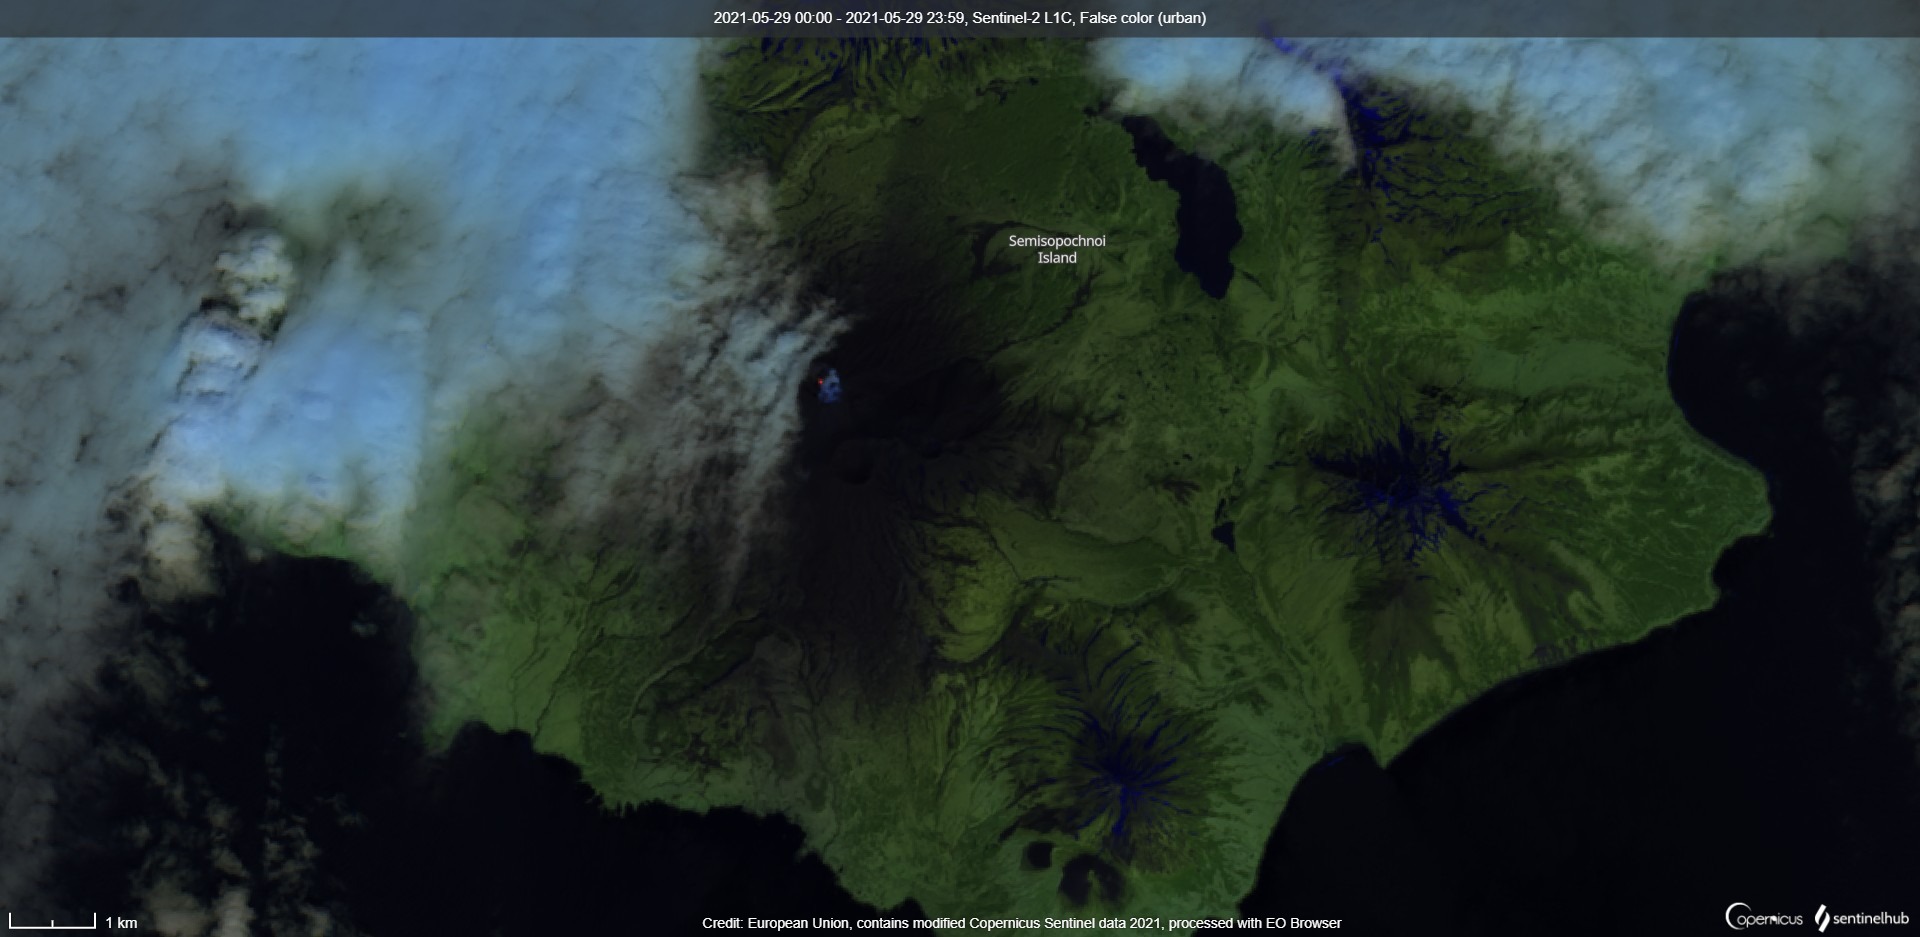 Semisopochnoi volcano (Aleutian Islands): resumption of activity - VolcanoDiscovery